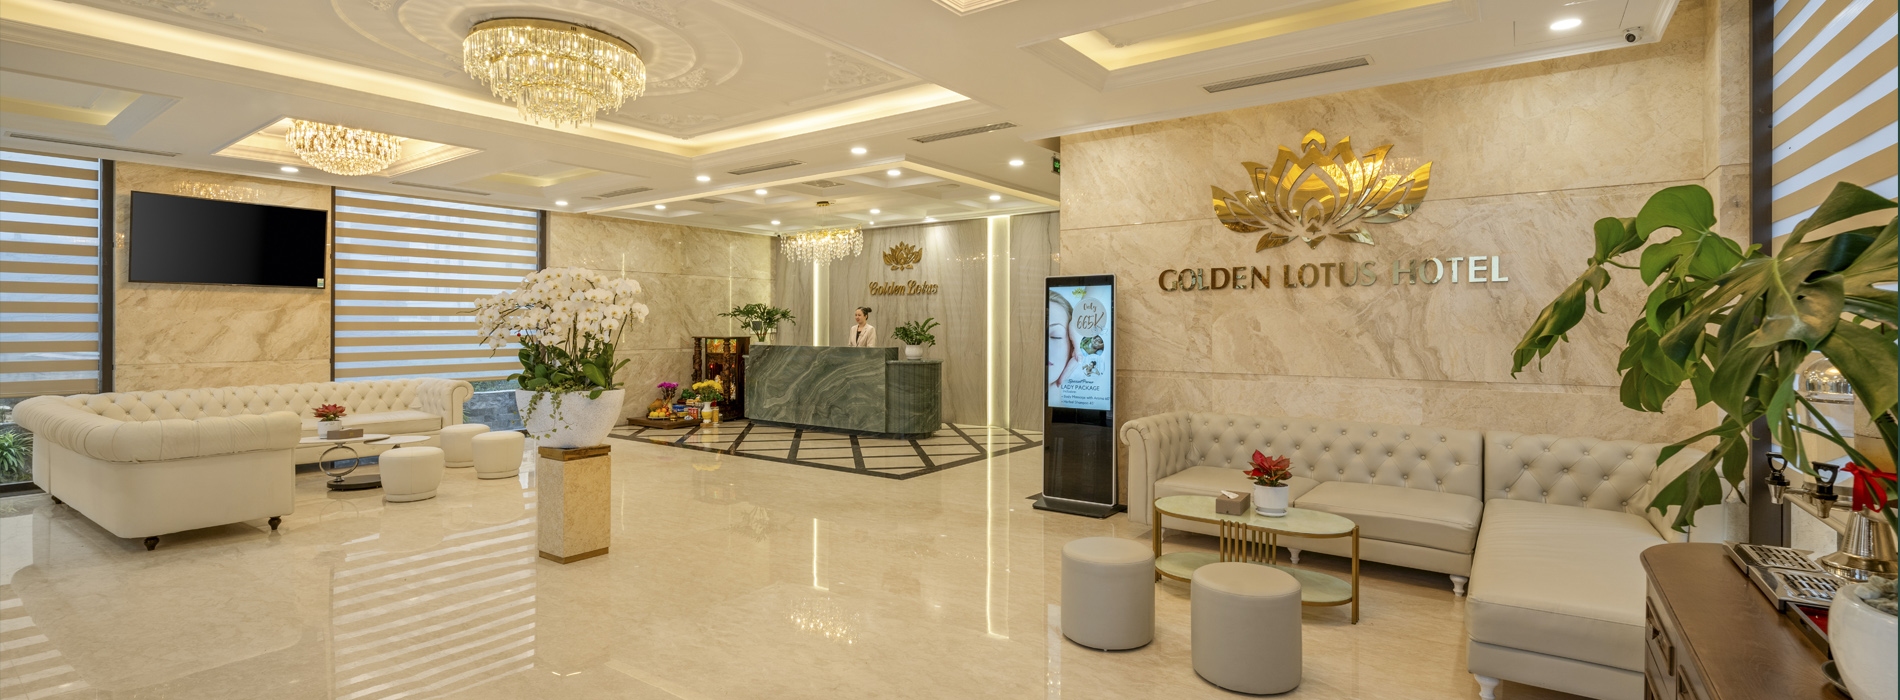 slide golden lotus hotel da nang